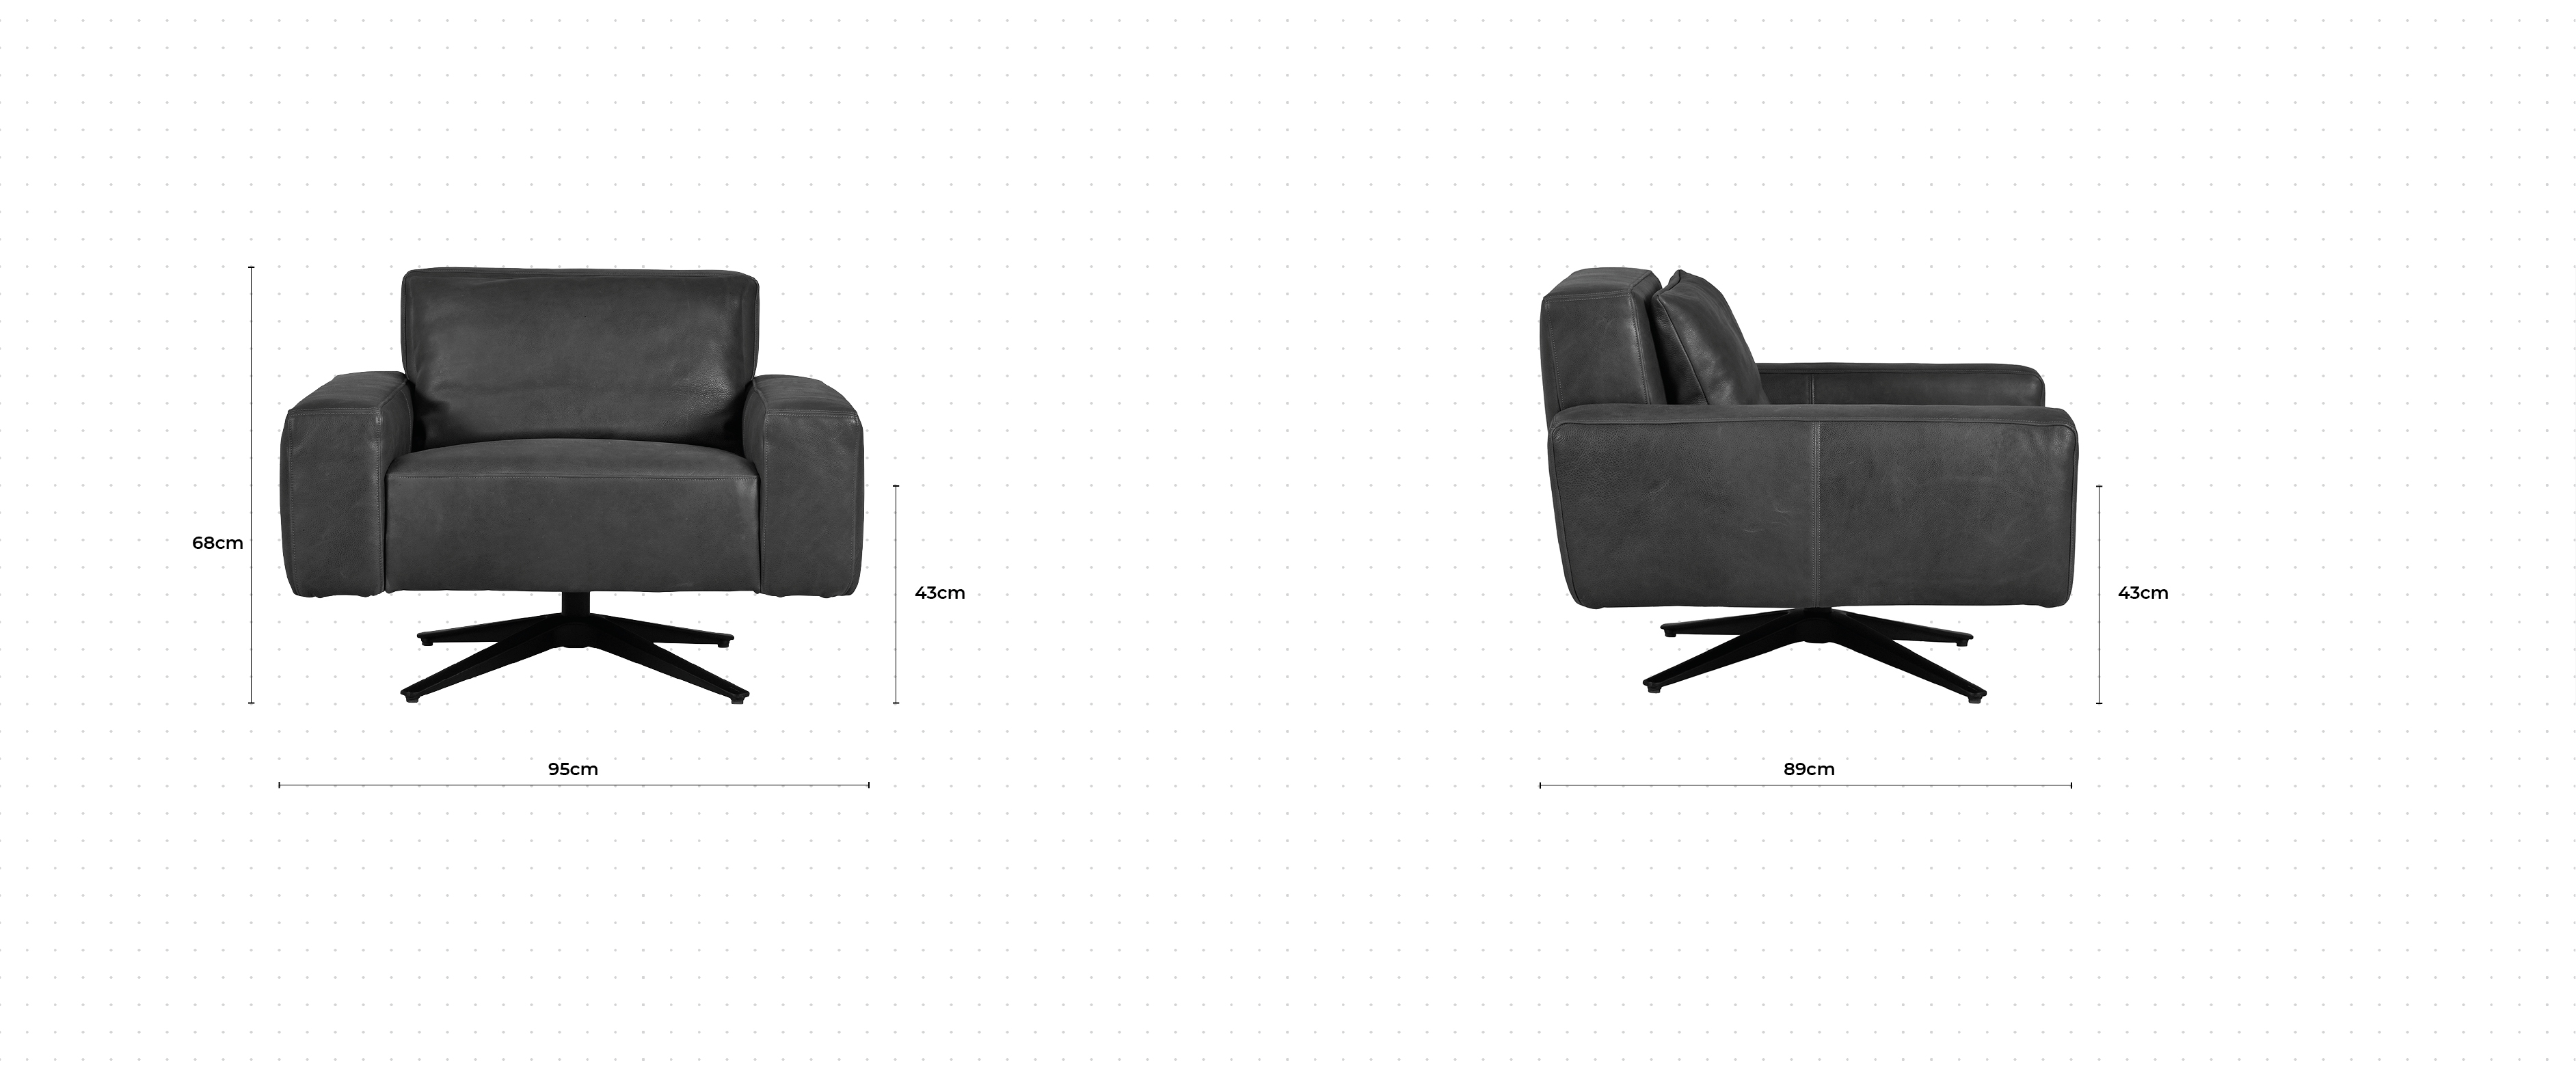 Fondant Swivel Chair dimensions